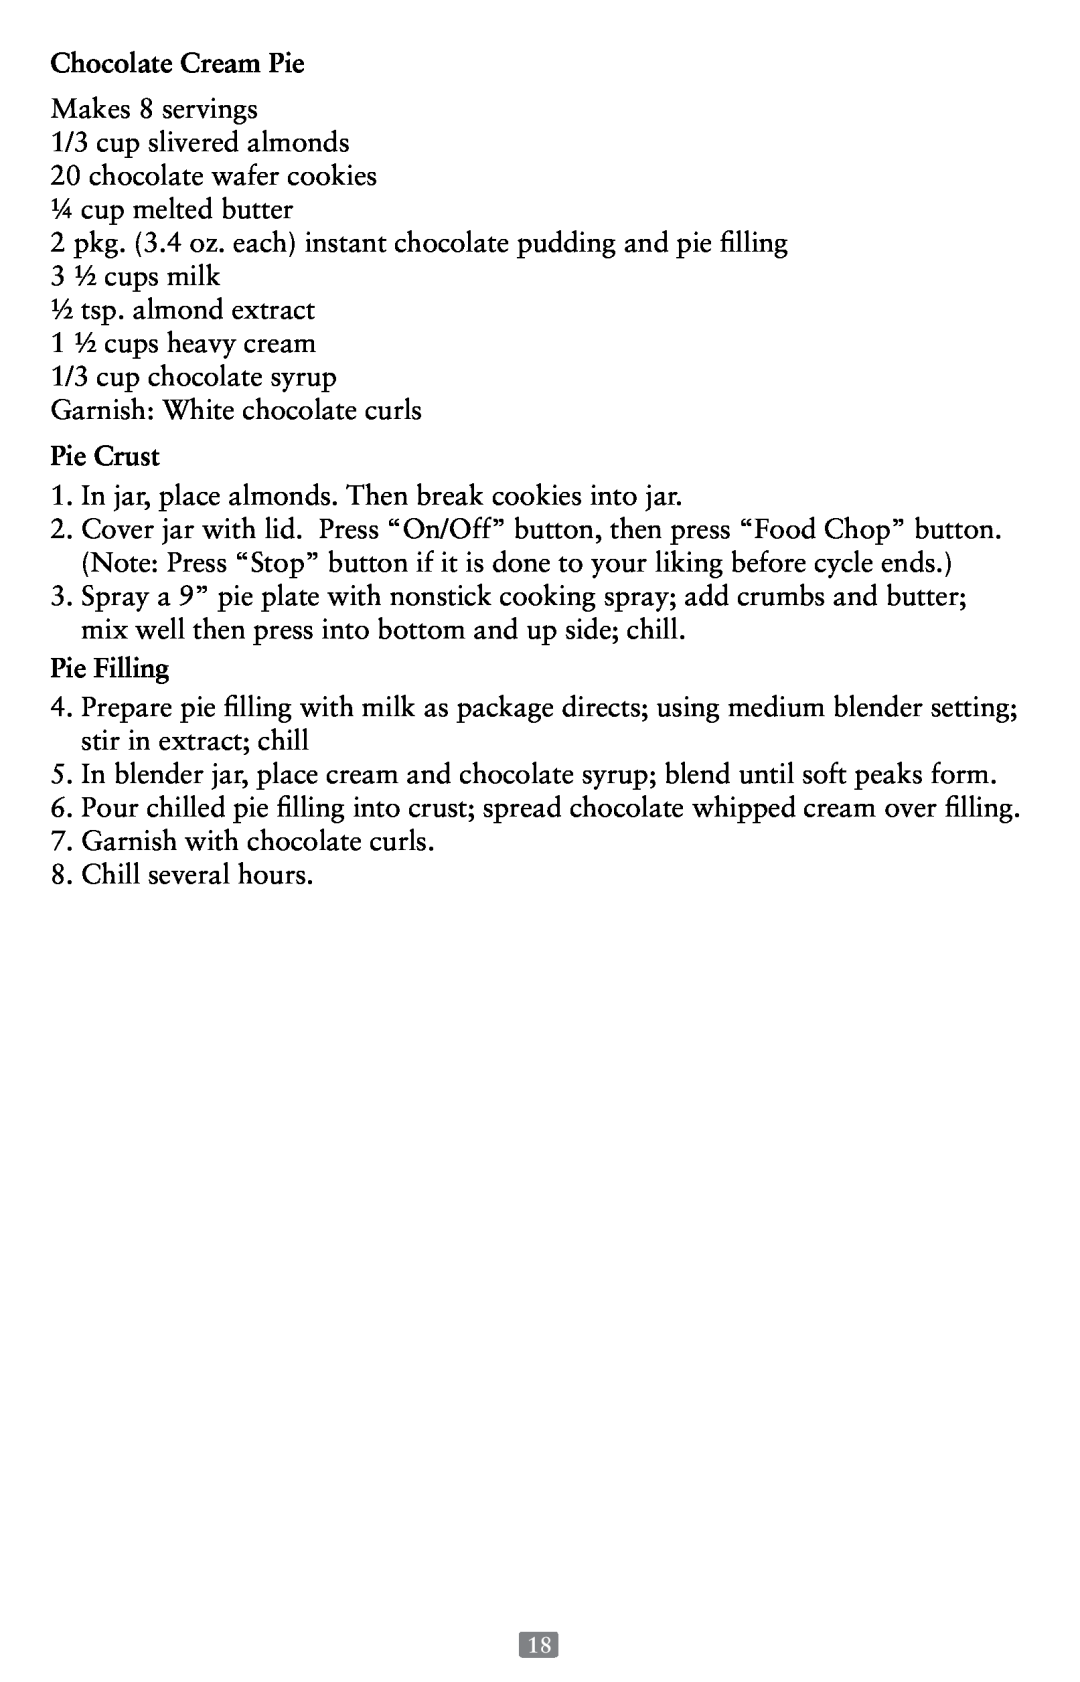 Oster P.N. 118532-005-000 instruction manual Chocolate Cream Pie, Pie Crust, Pie Filling 